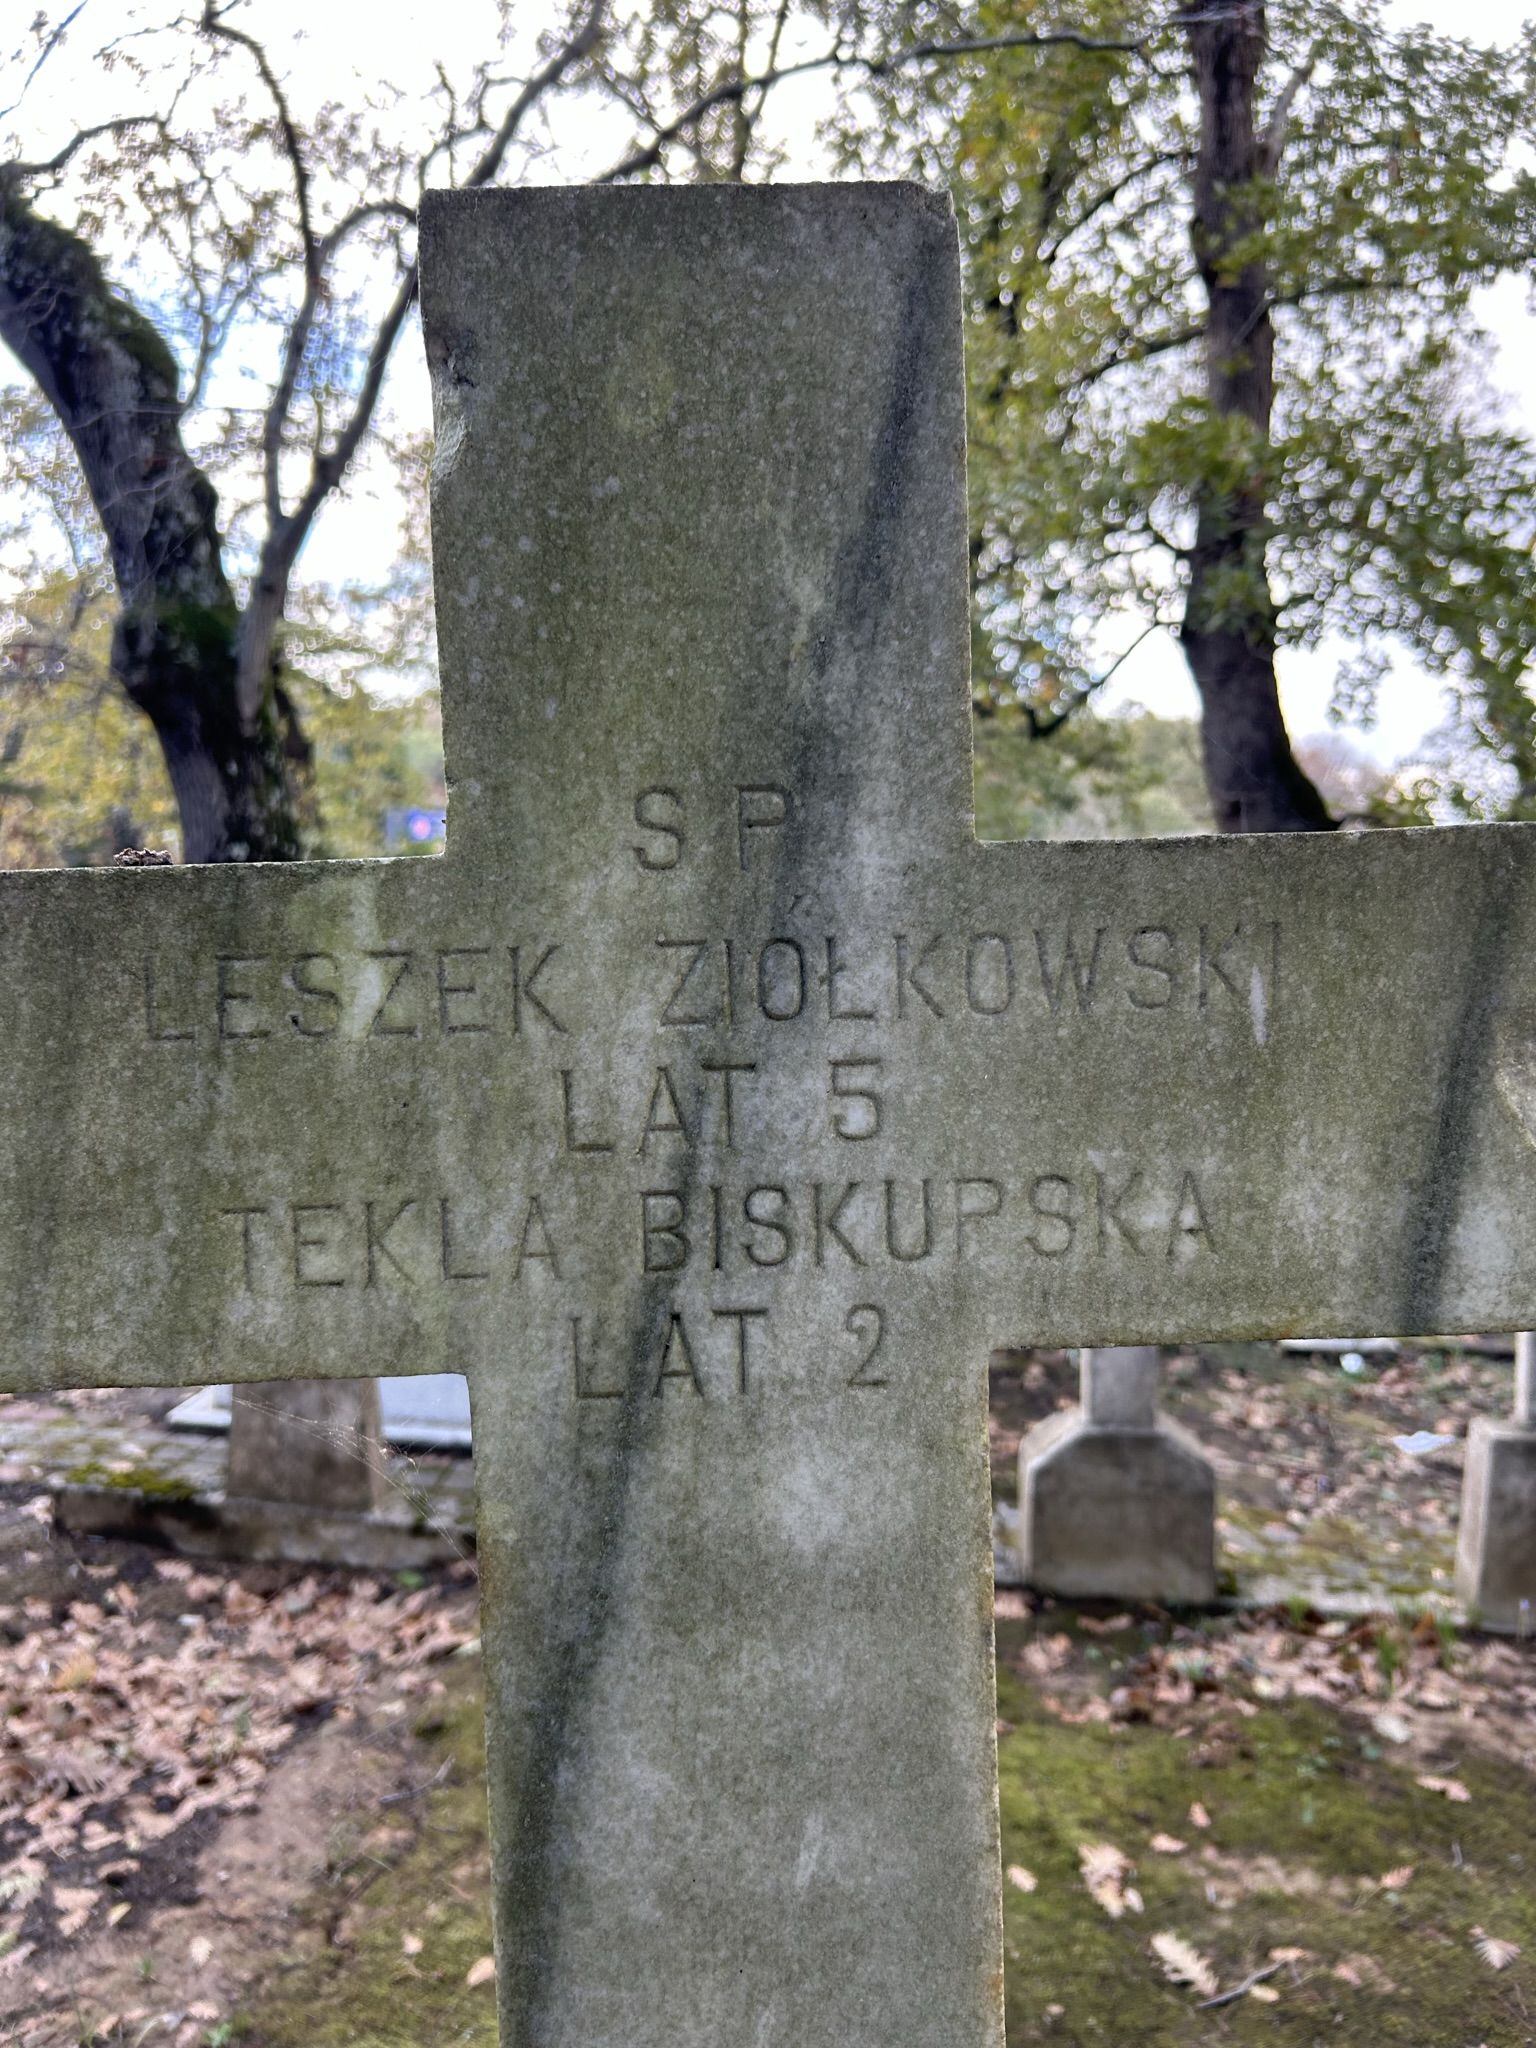 Inscription from the tombstone of Leszek and Tekla Ziółkowski, Catholic cemetery in Adampol